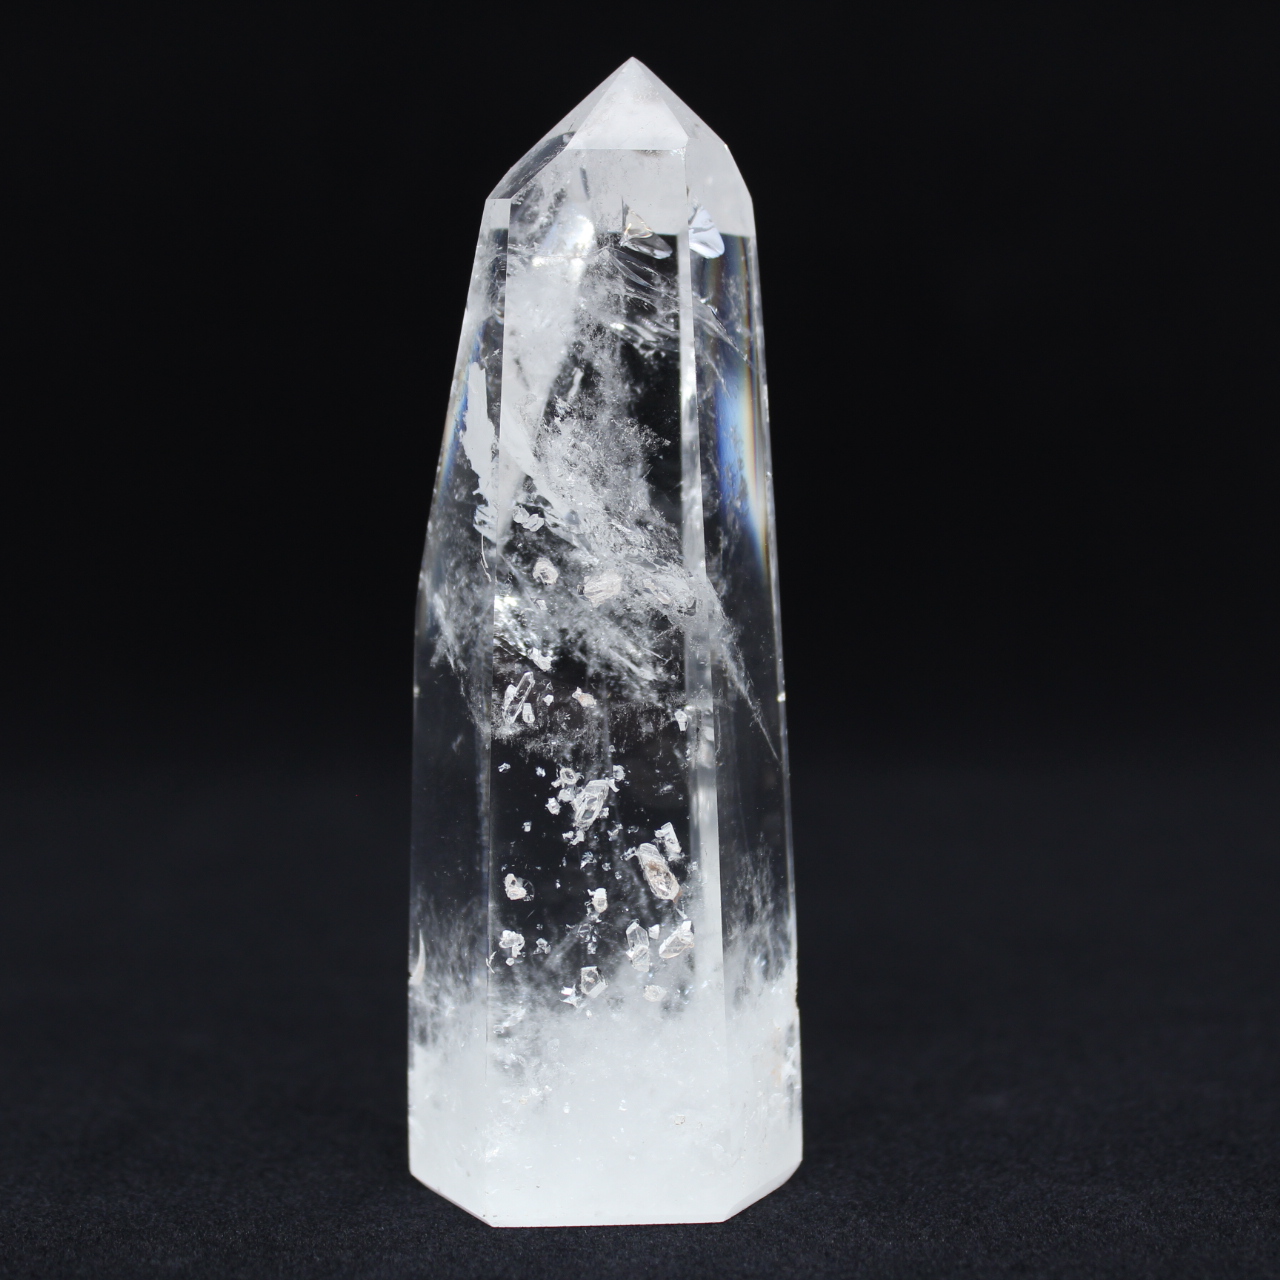 prisma de cristal de roca